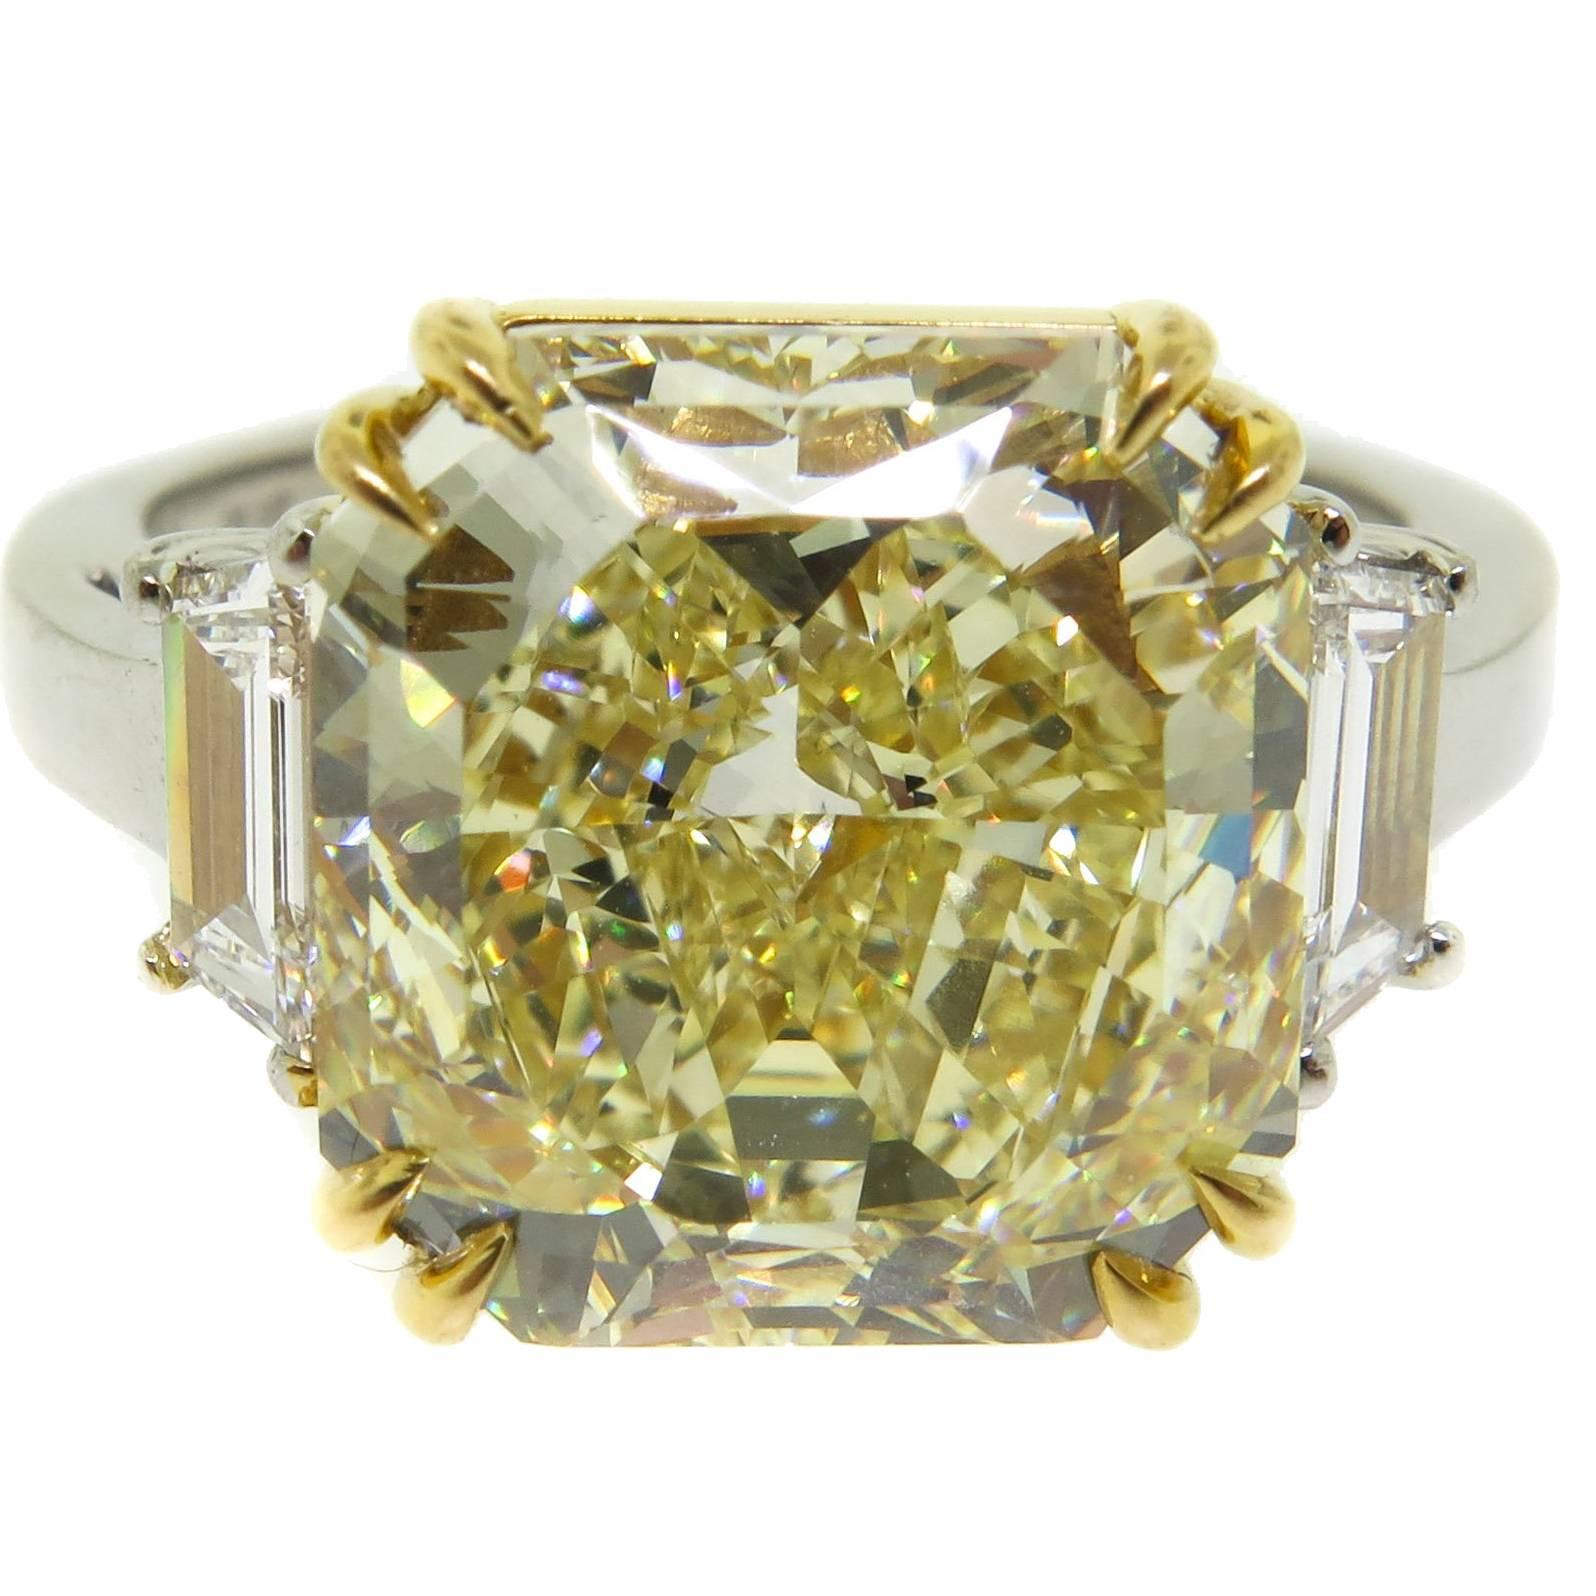 Manfredi Jewels 7.41 Carat GIA Radiant Cut Fancy Yellow Diamond Platinum Ring